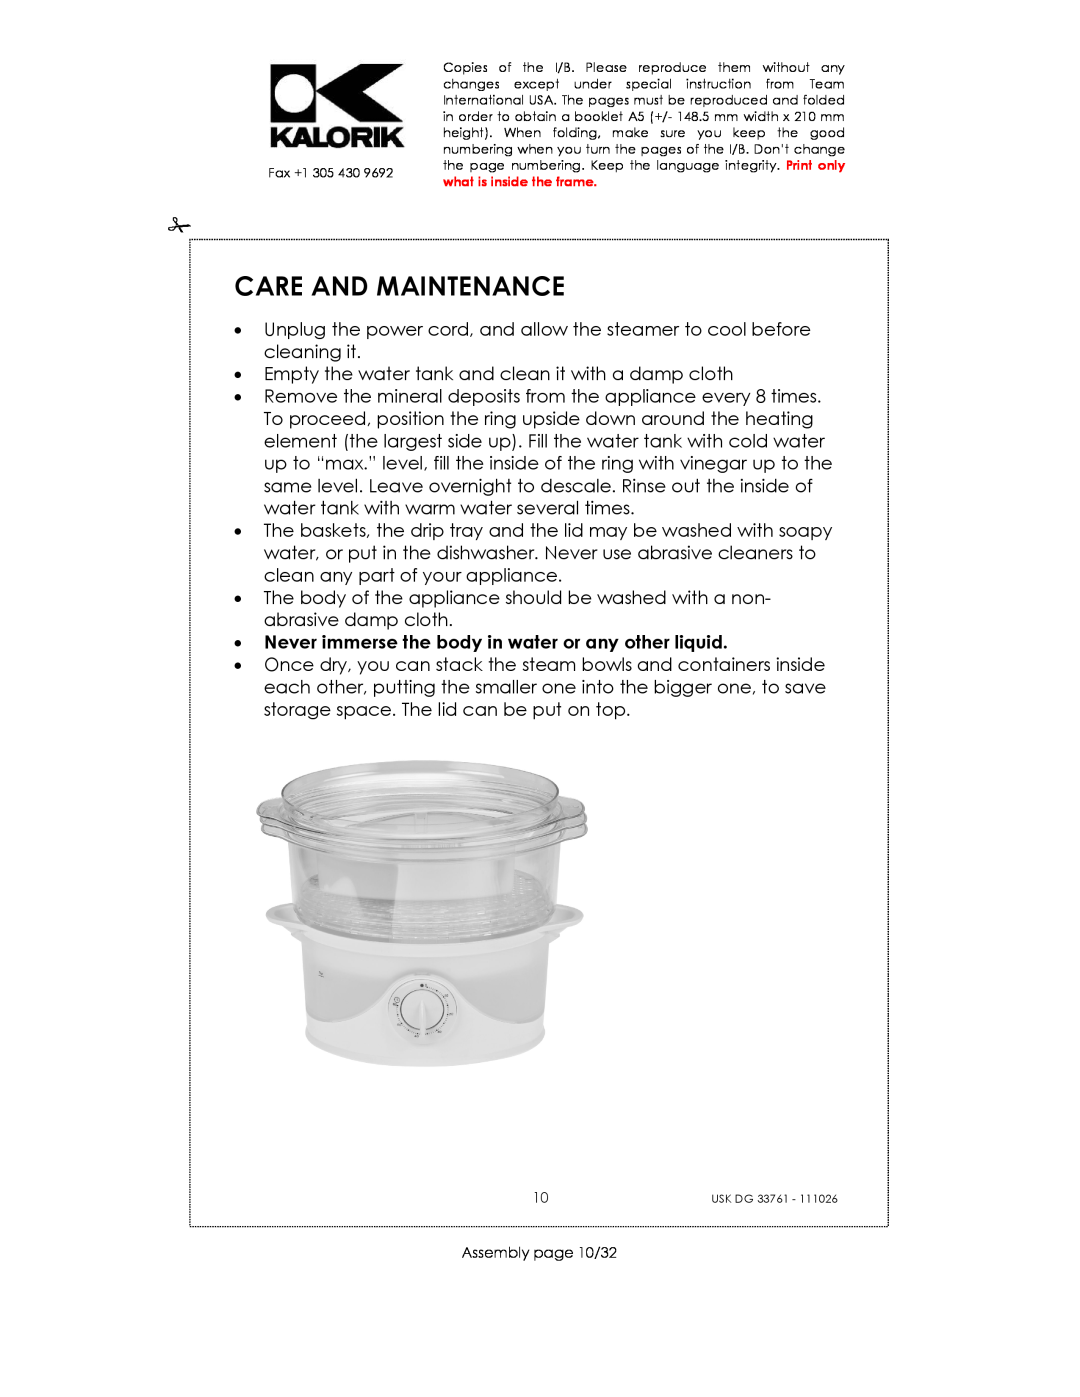 Kalorik USK DG 33761 manual Care And Maintenance, Assembly page 10/32 